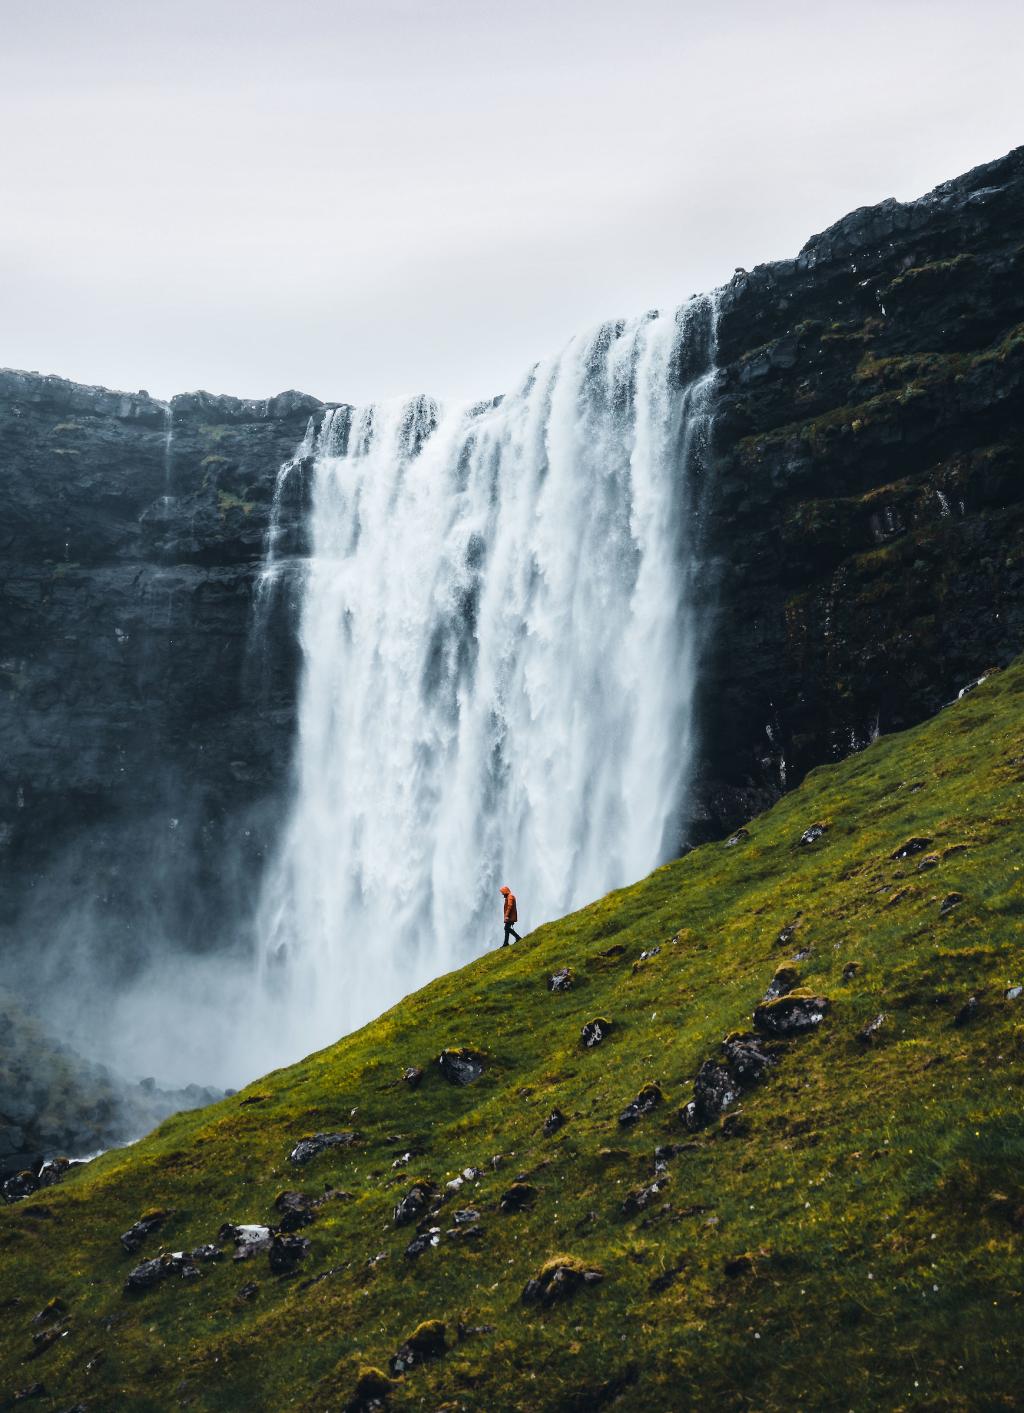 hiking by the waterfall Fossá, Eysturoy. By Daryl Walker / @darylswalker